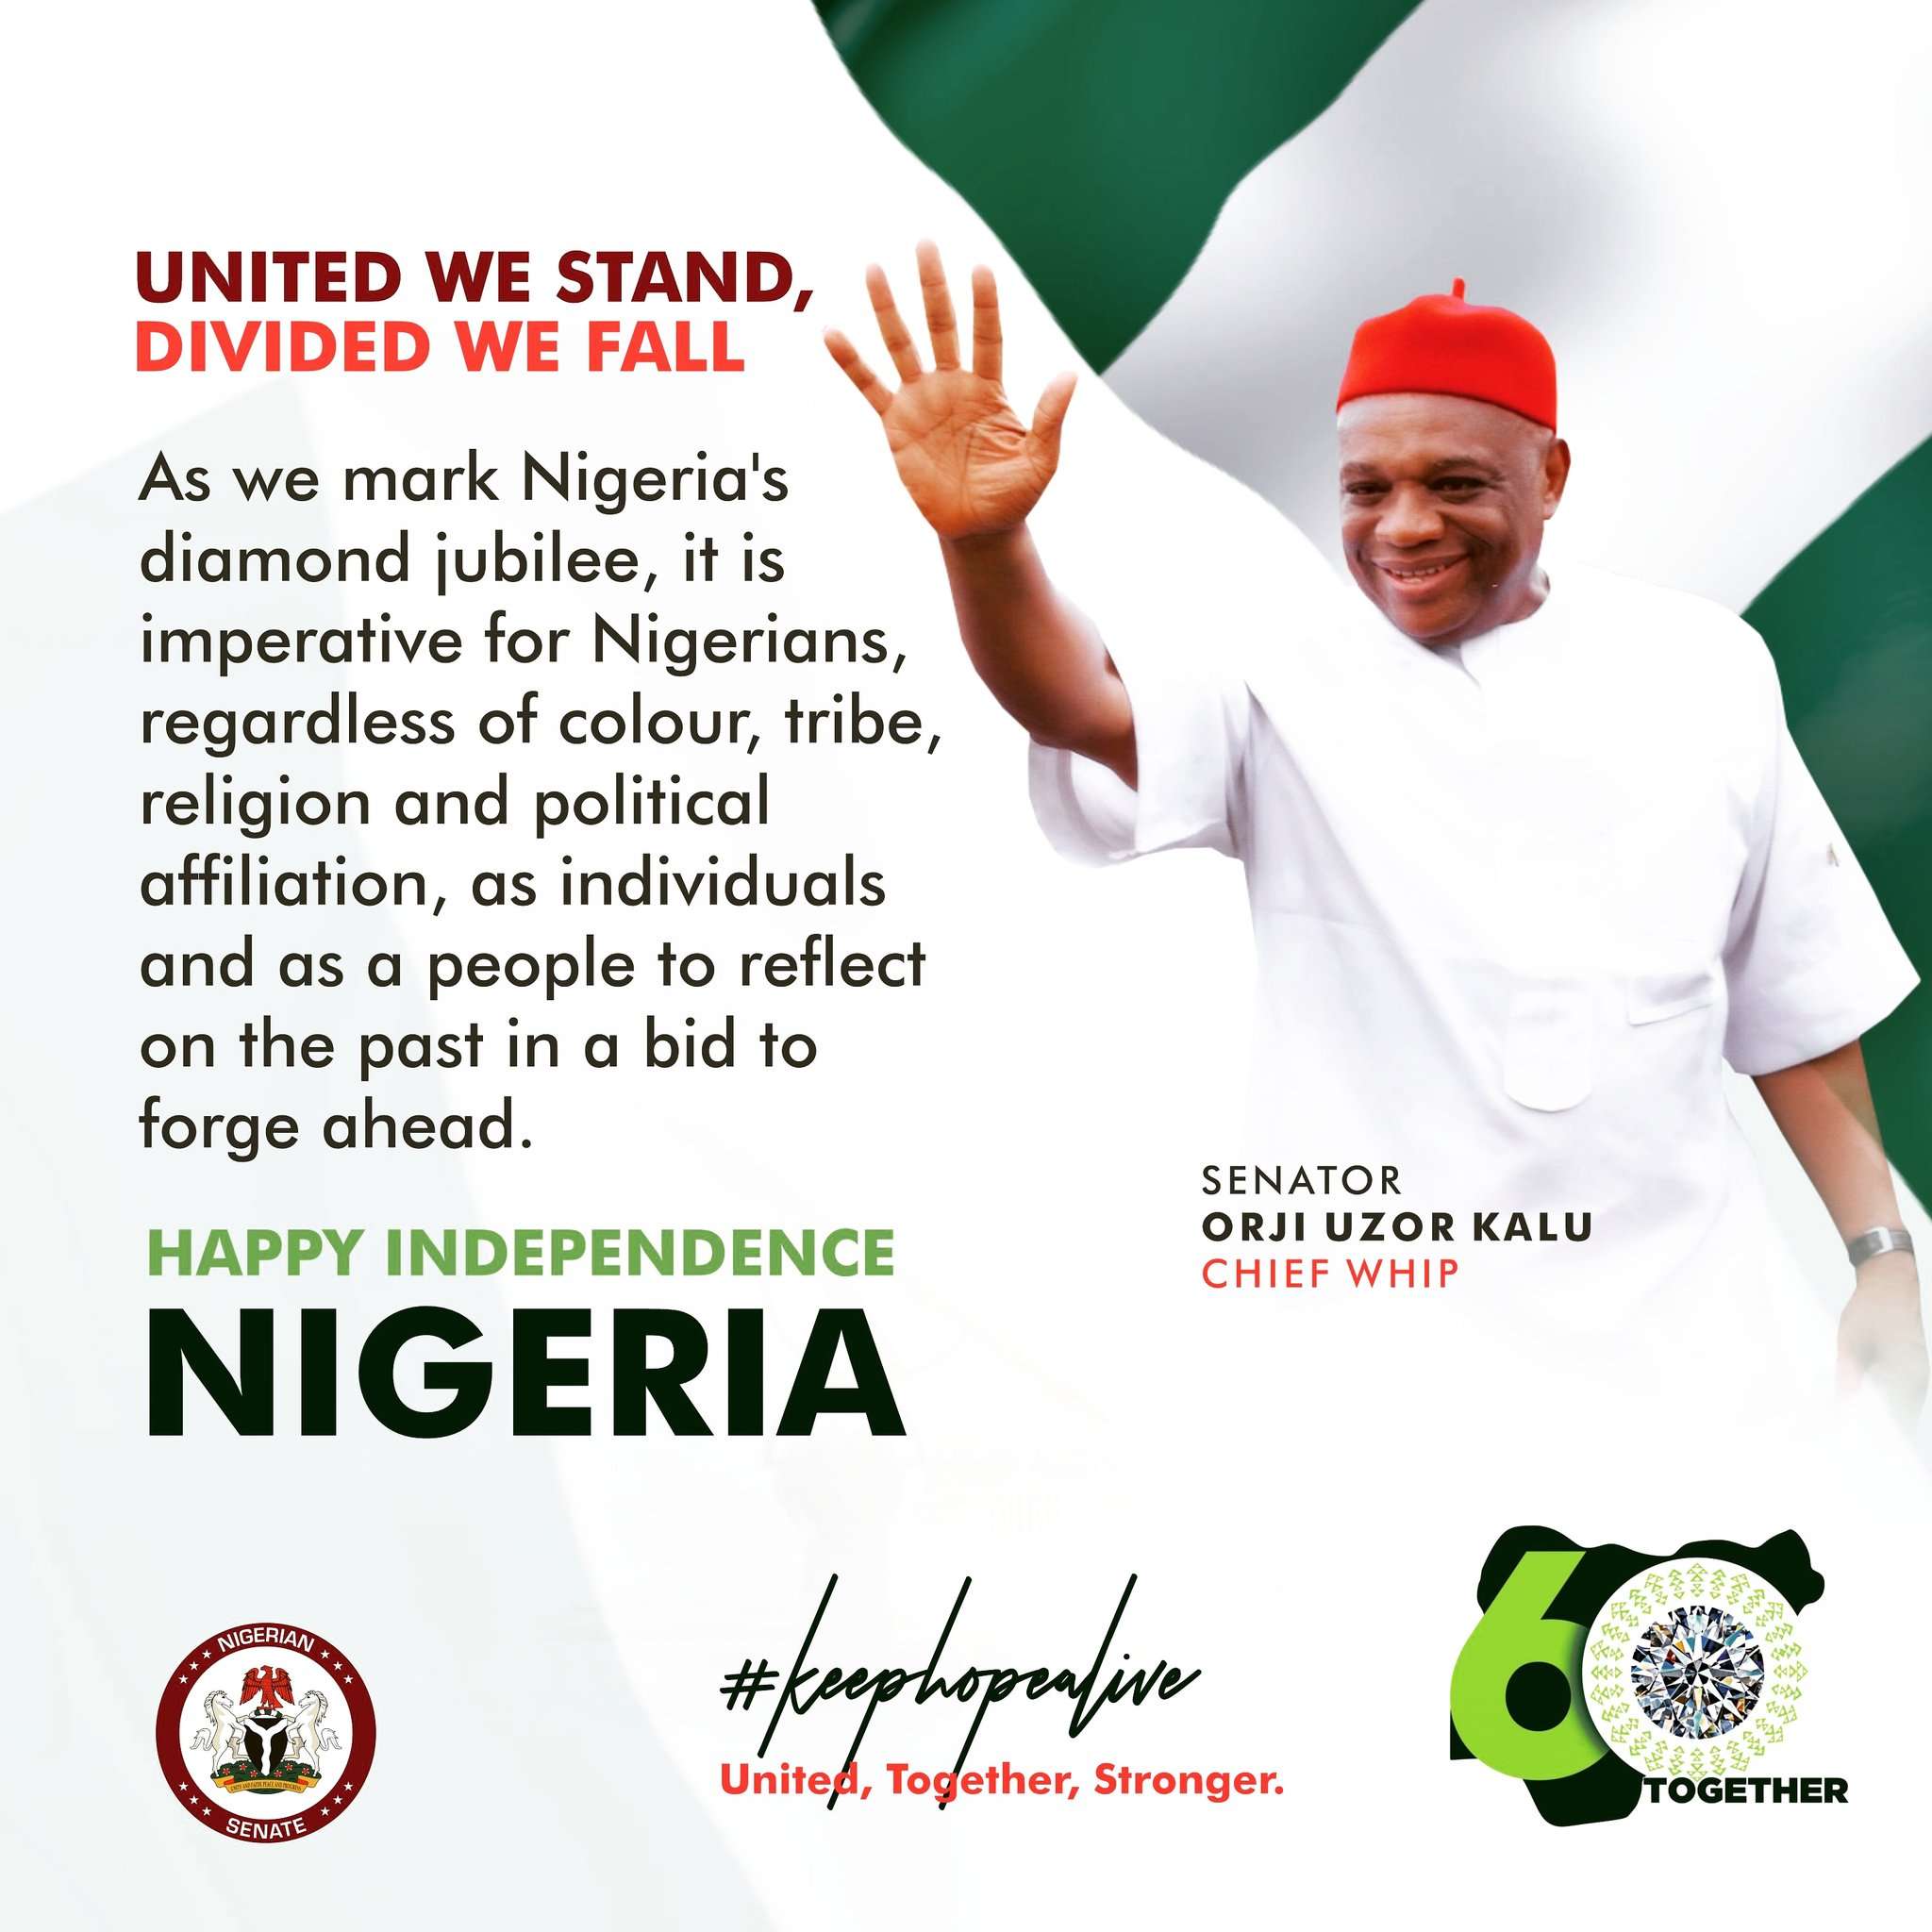 Nigeria @60: Senator Orji Uzor Kalu Urges Nigerians to Be Thankful to God